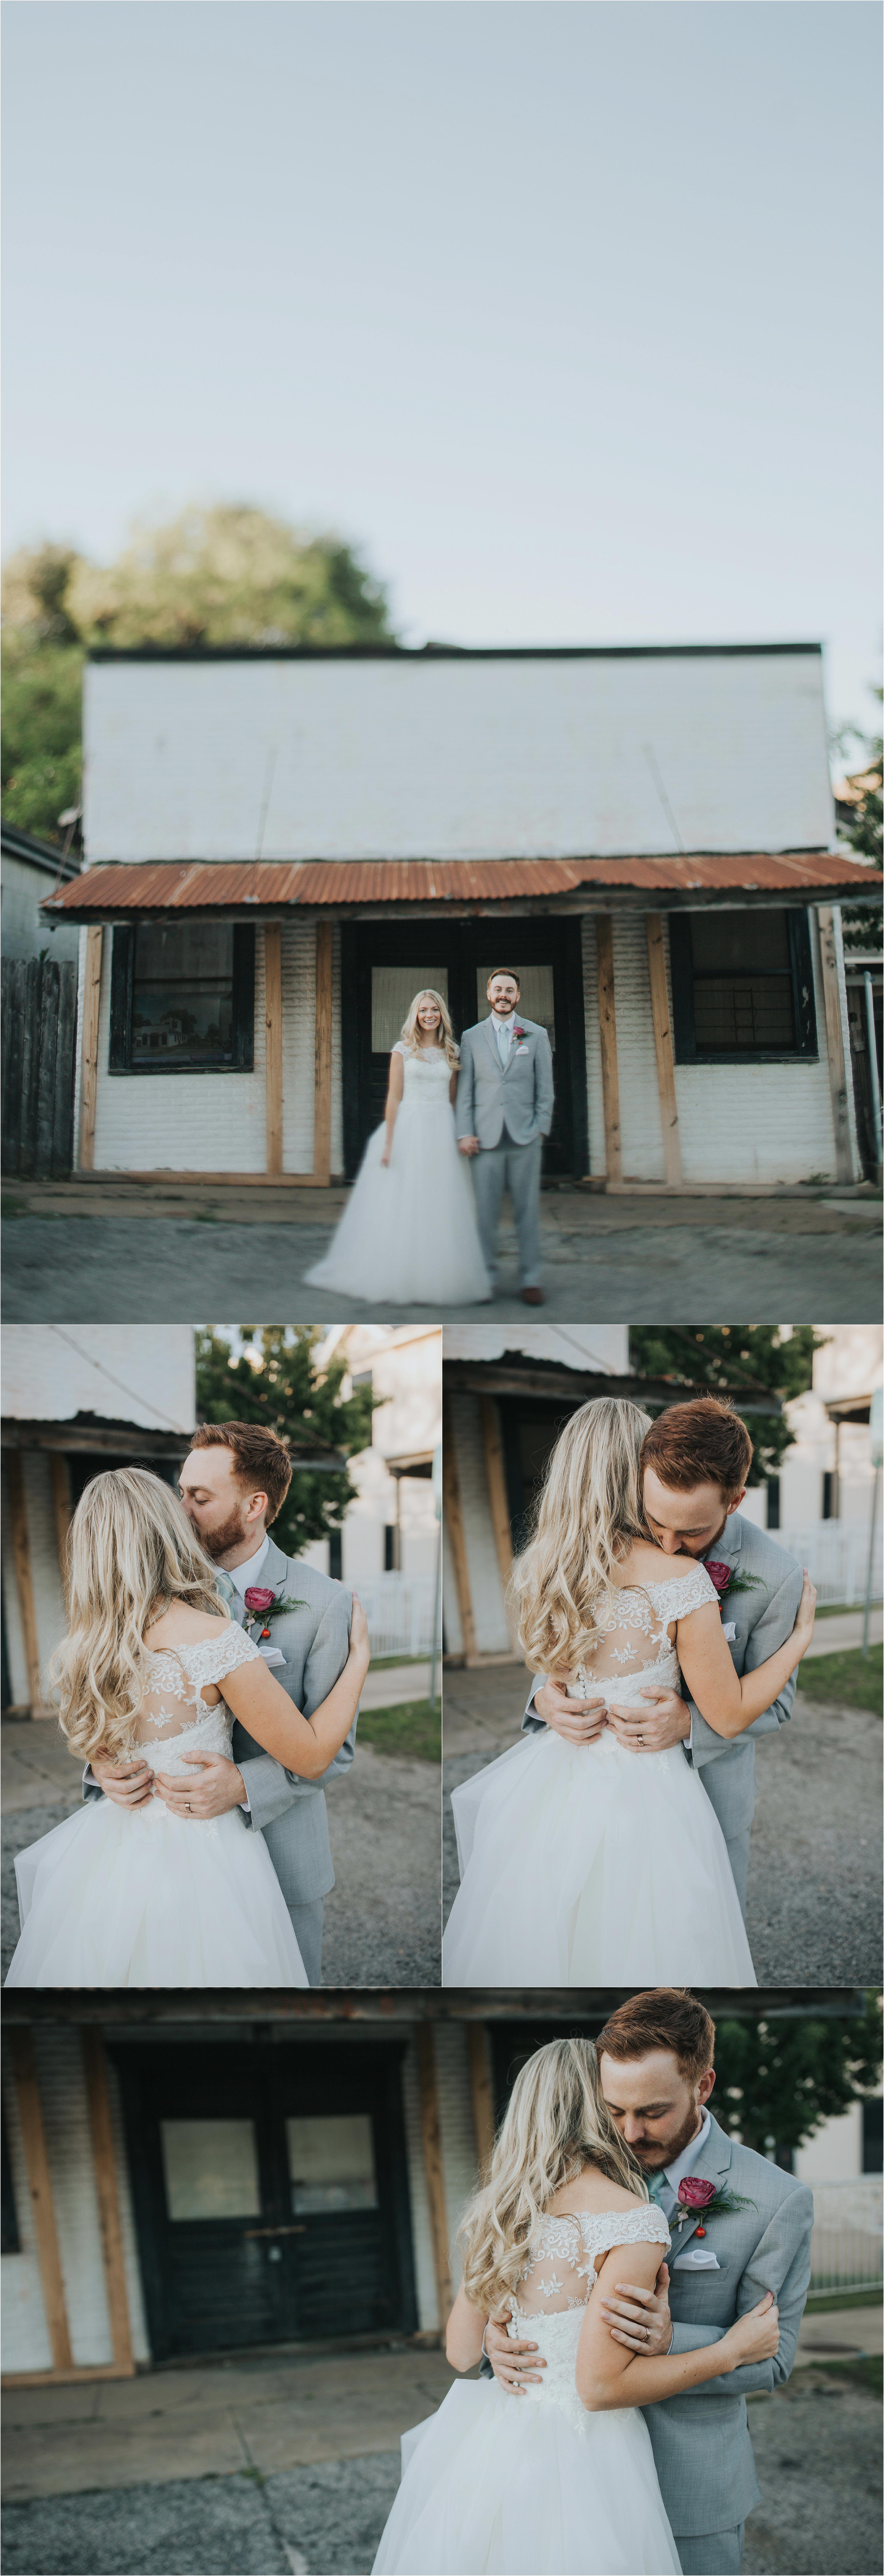 union-on-eighth-wedding-fredericksburg-texas-oakwood-photo-video-49.jpg